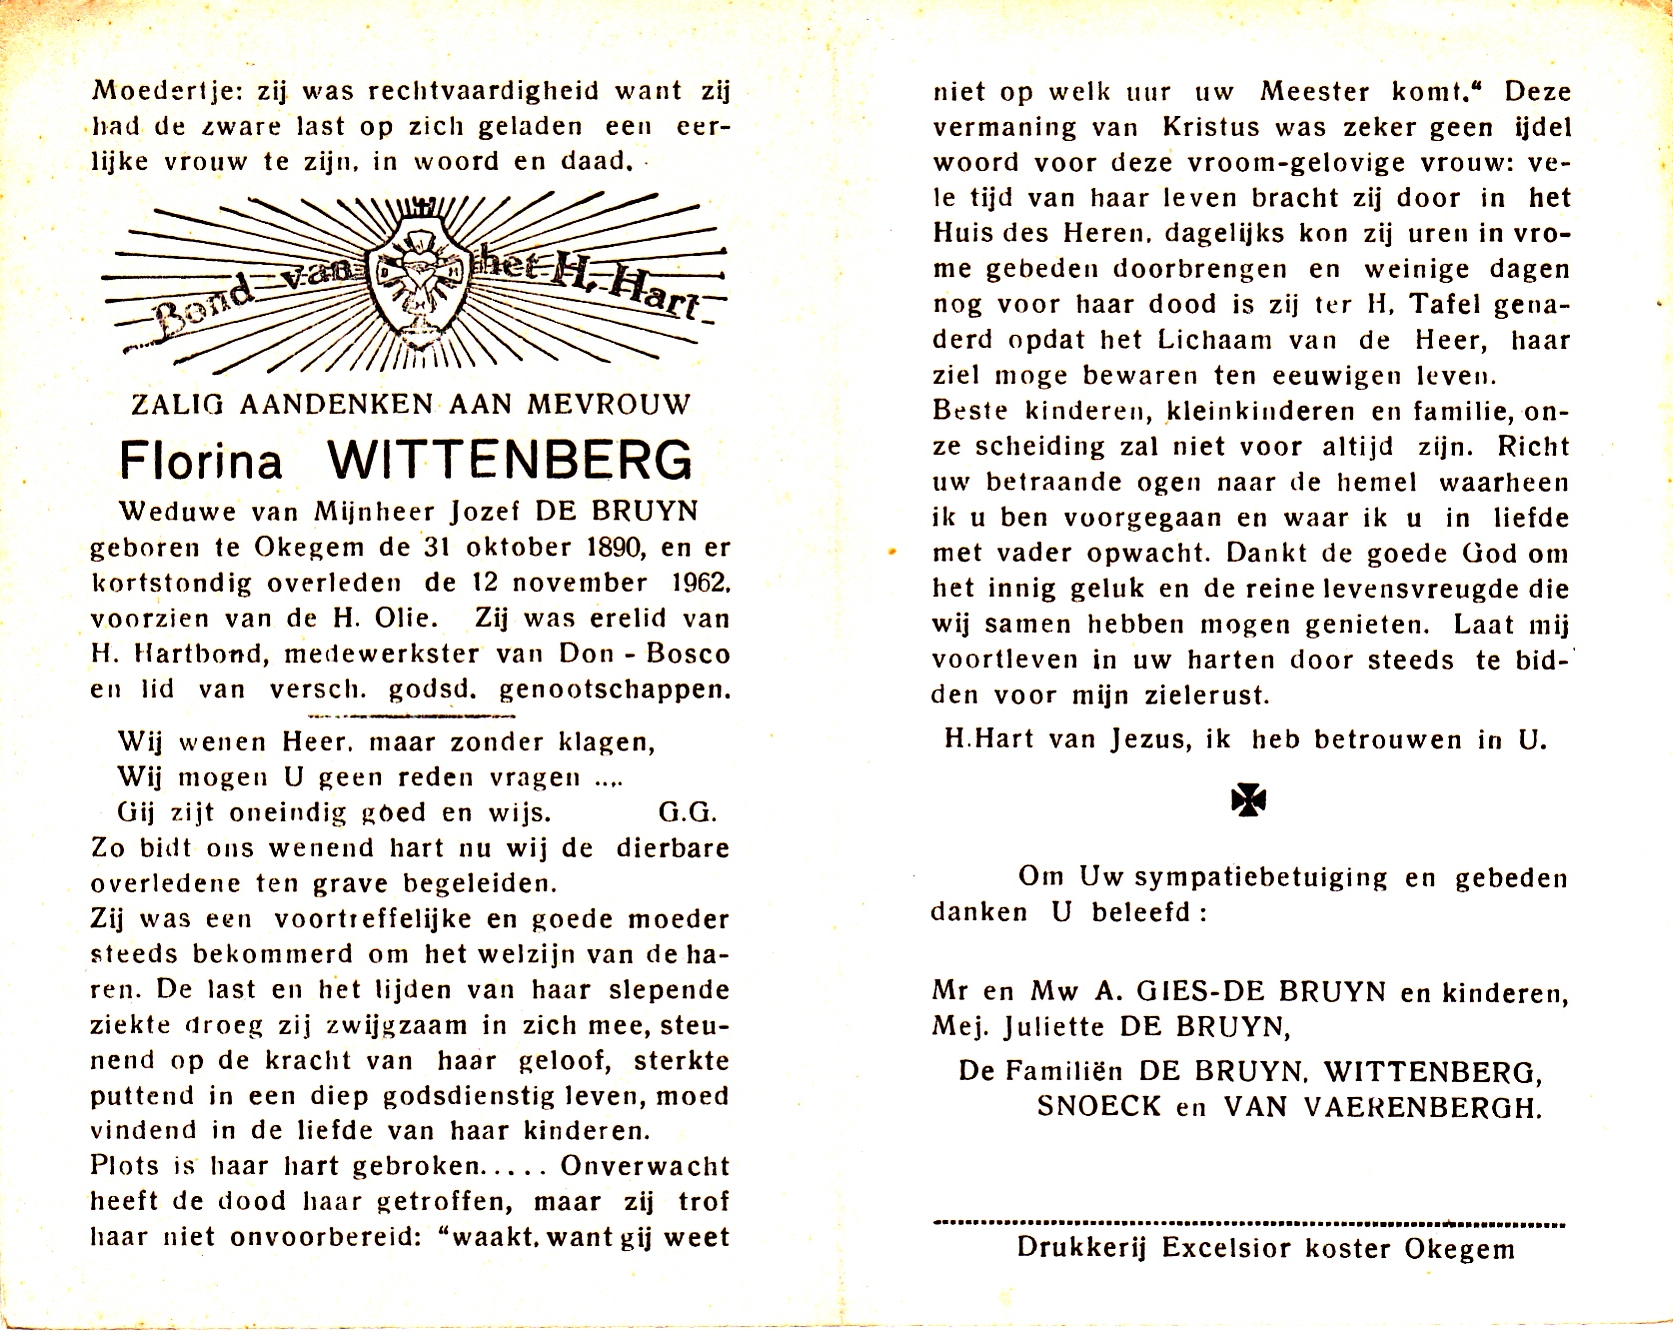 Wittenberg Florina